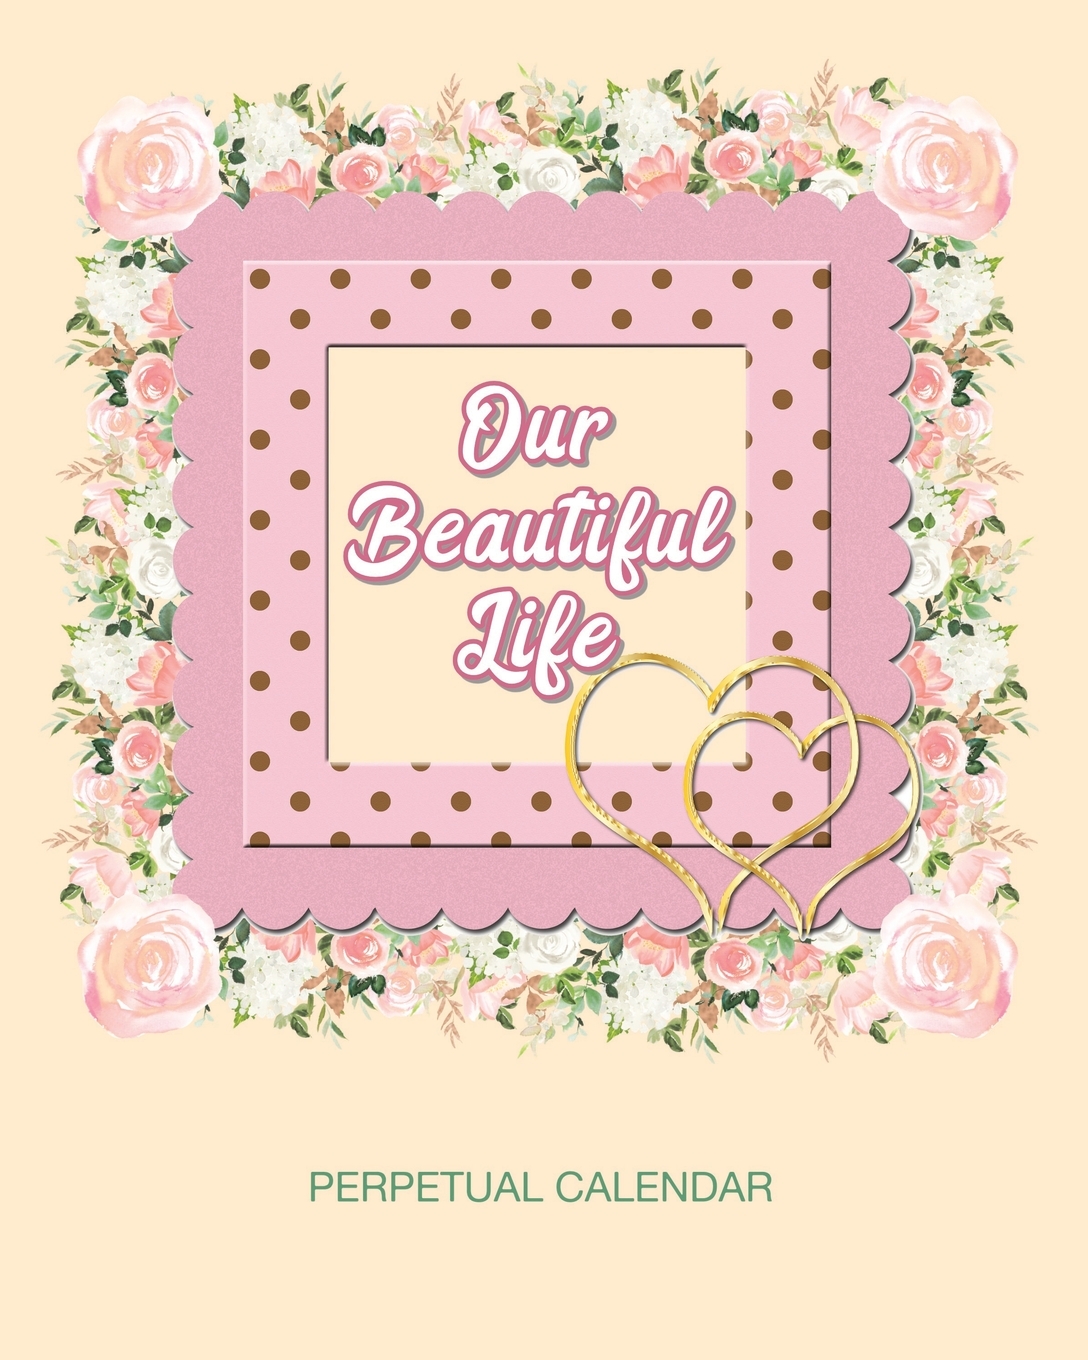 Our Beautiful Life Perpetual Calendar : Perpetual Calendar Date keeper for Birthdays, Anniversaries, Important Events and Memories (Paperback) - image 1 of 1